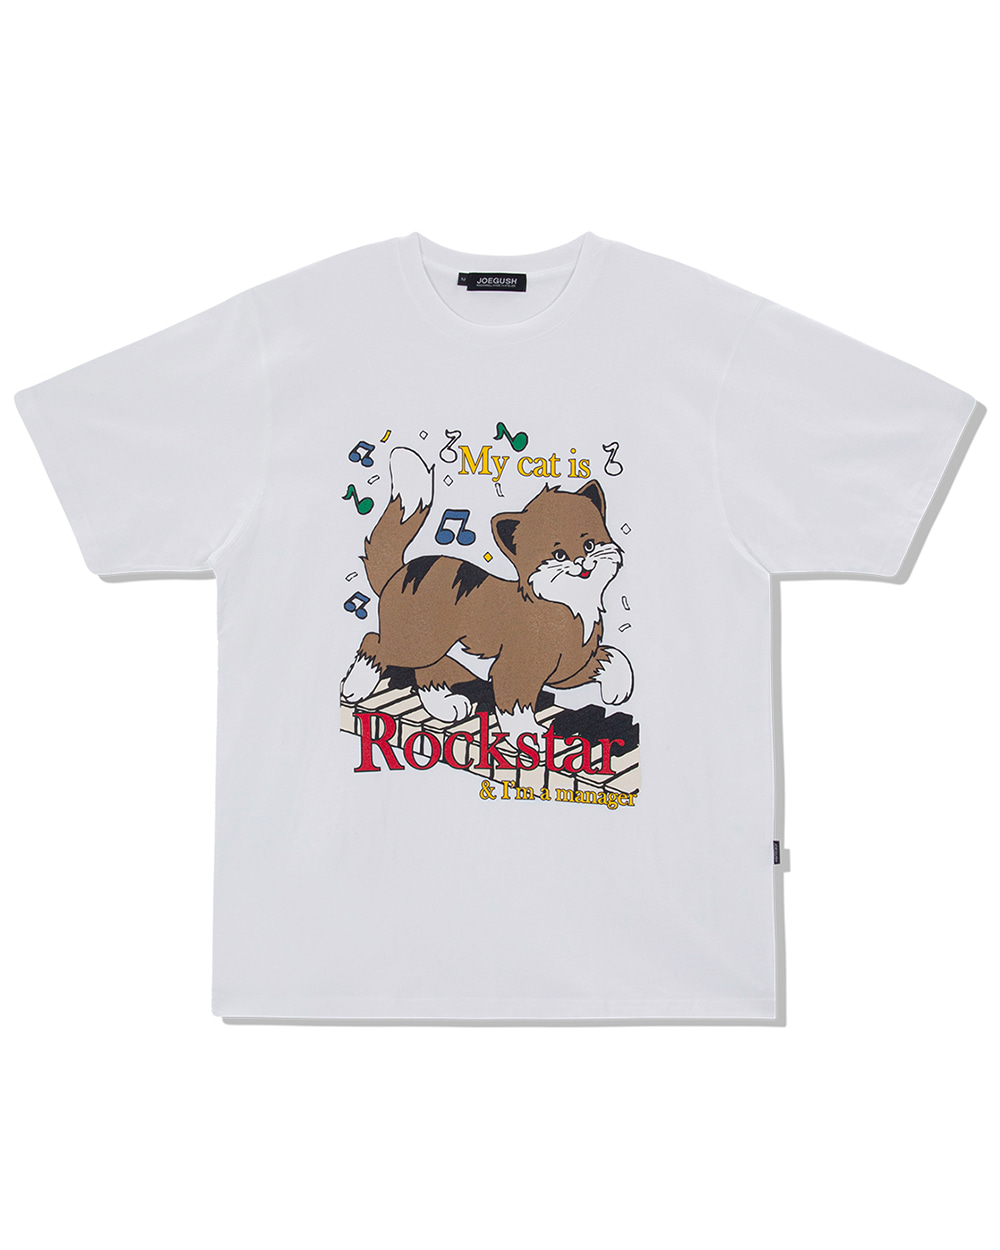 Piano Rockstar T-Shirt (White)